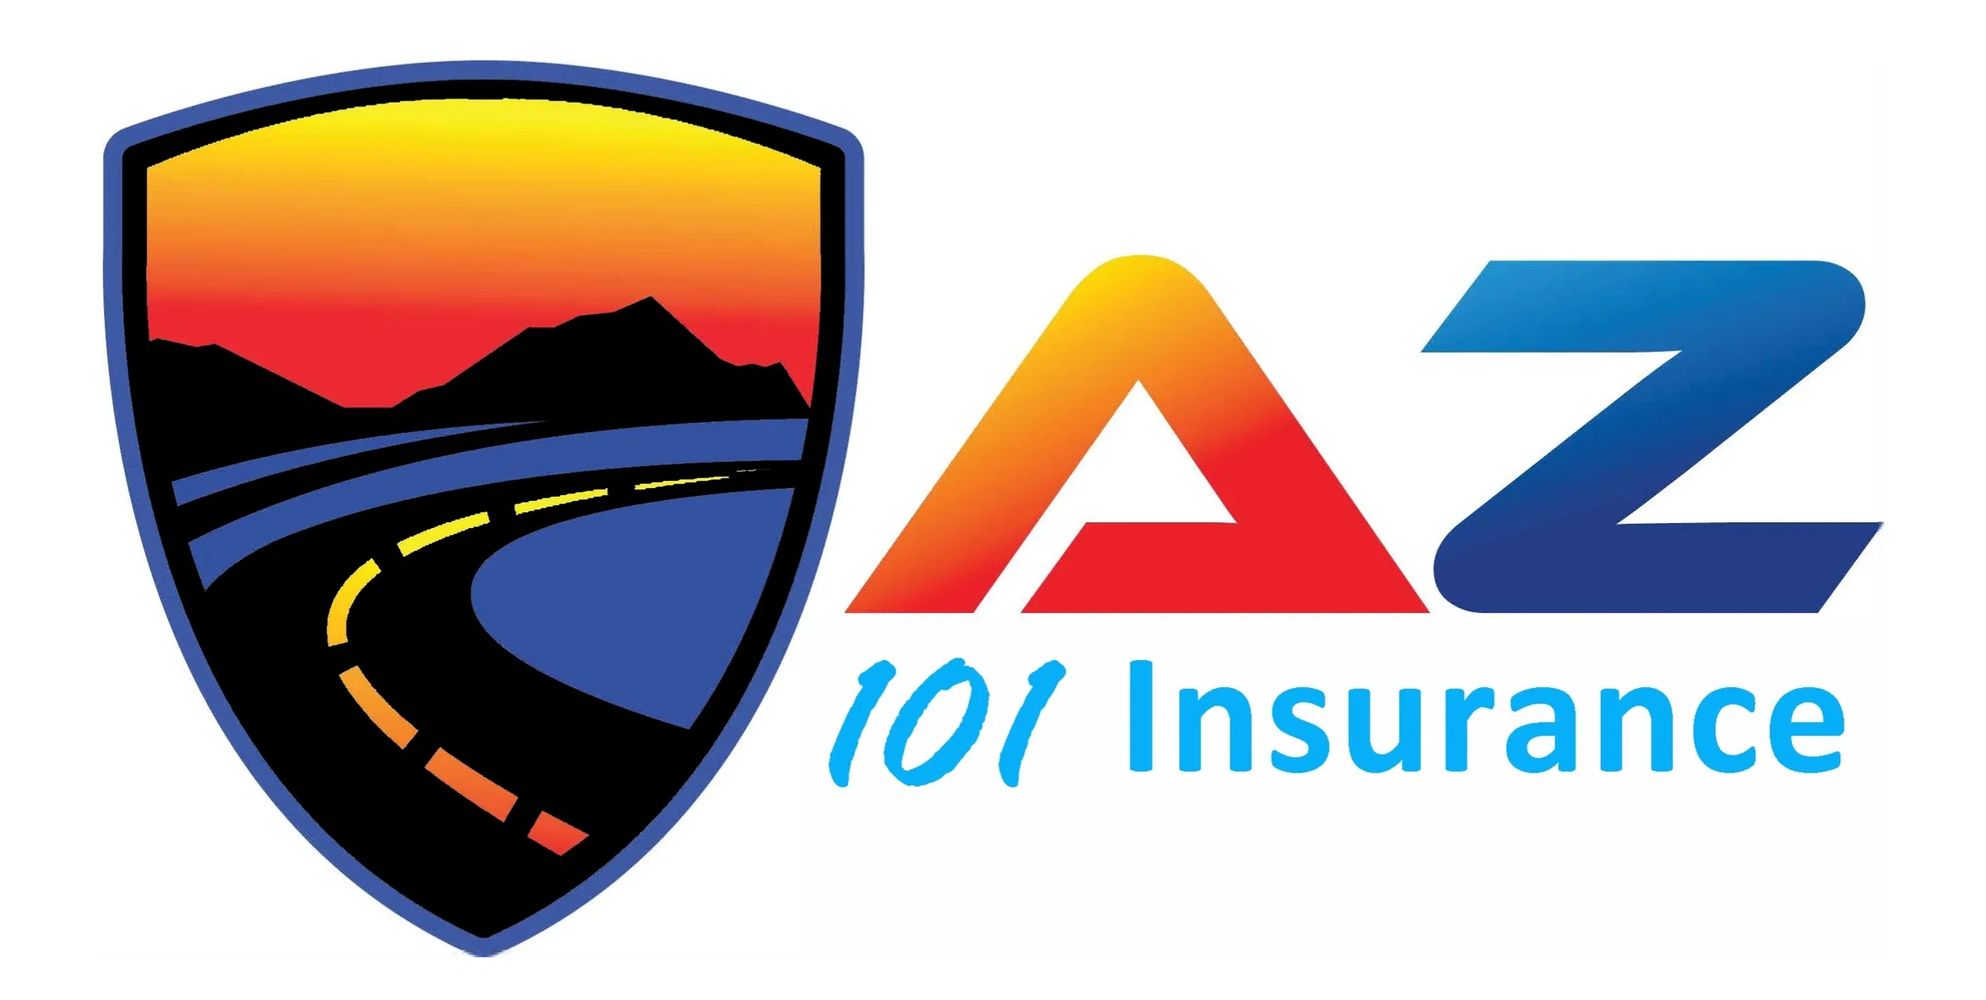 Best insurance Scottsdale arizona phoenix
cheap quote
home auto boat <h1>classic car insurance</h1>